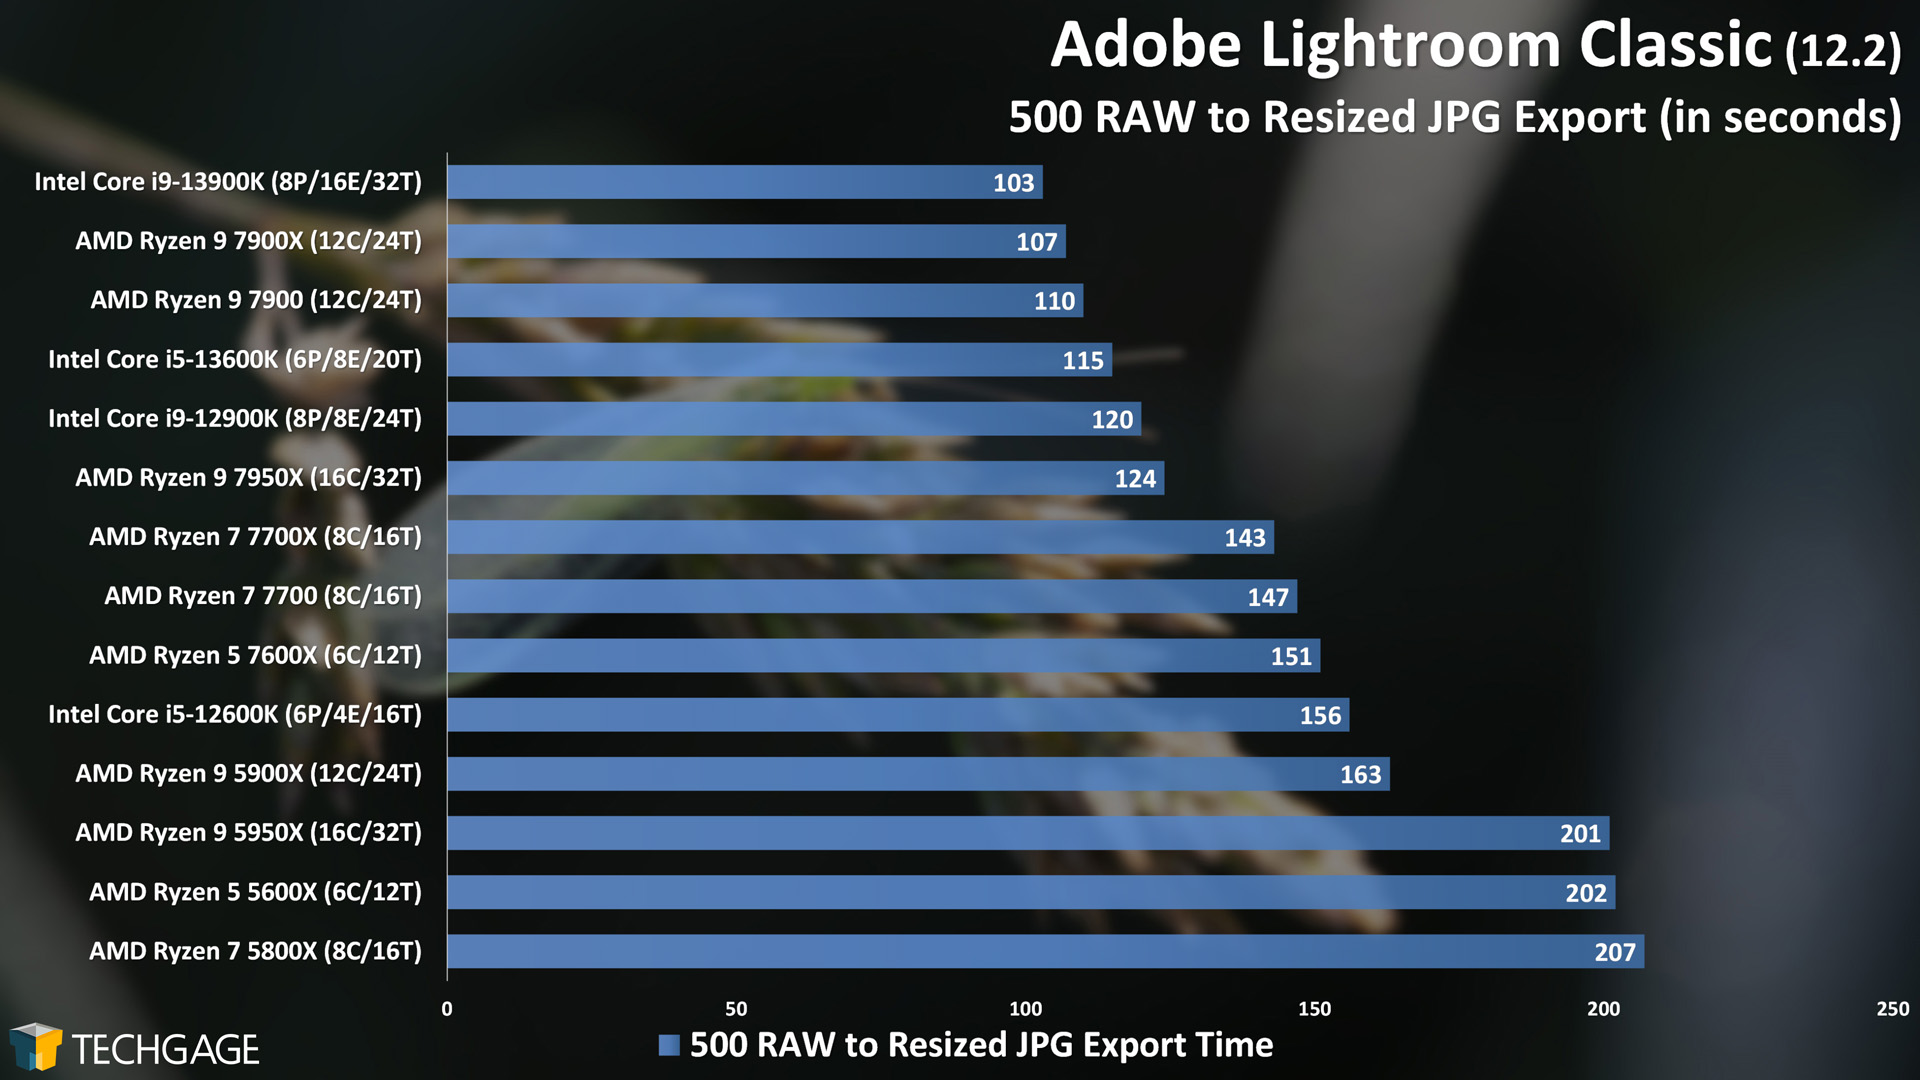 Adobe Lightroom Classic - CPU Export Performance (RAW to JPEG)